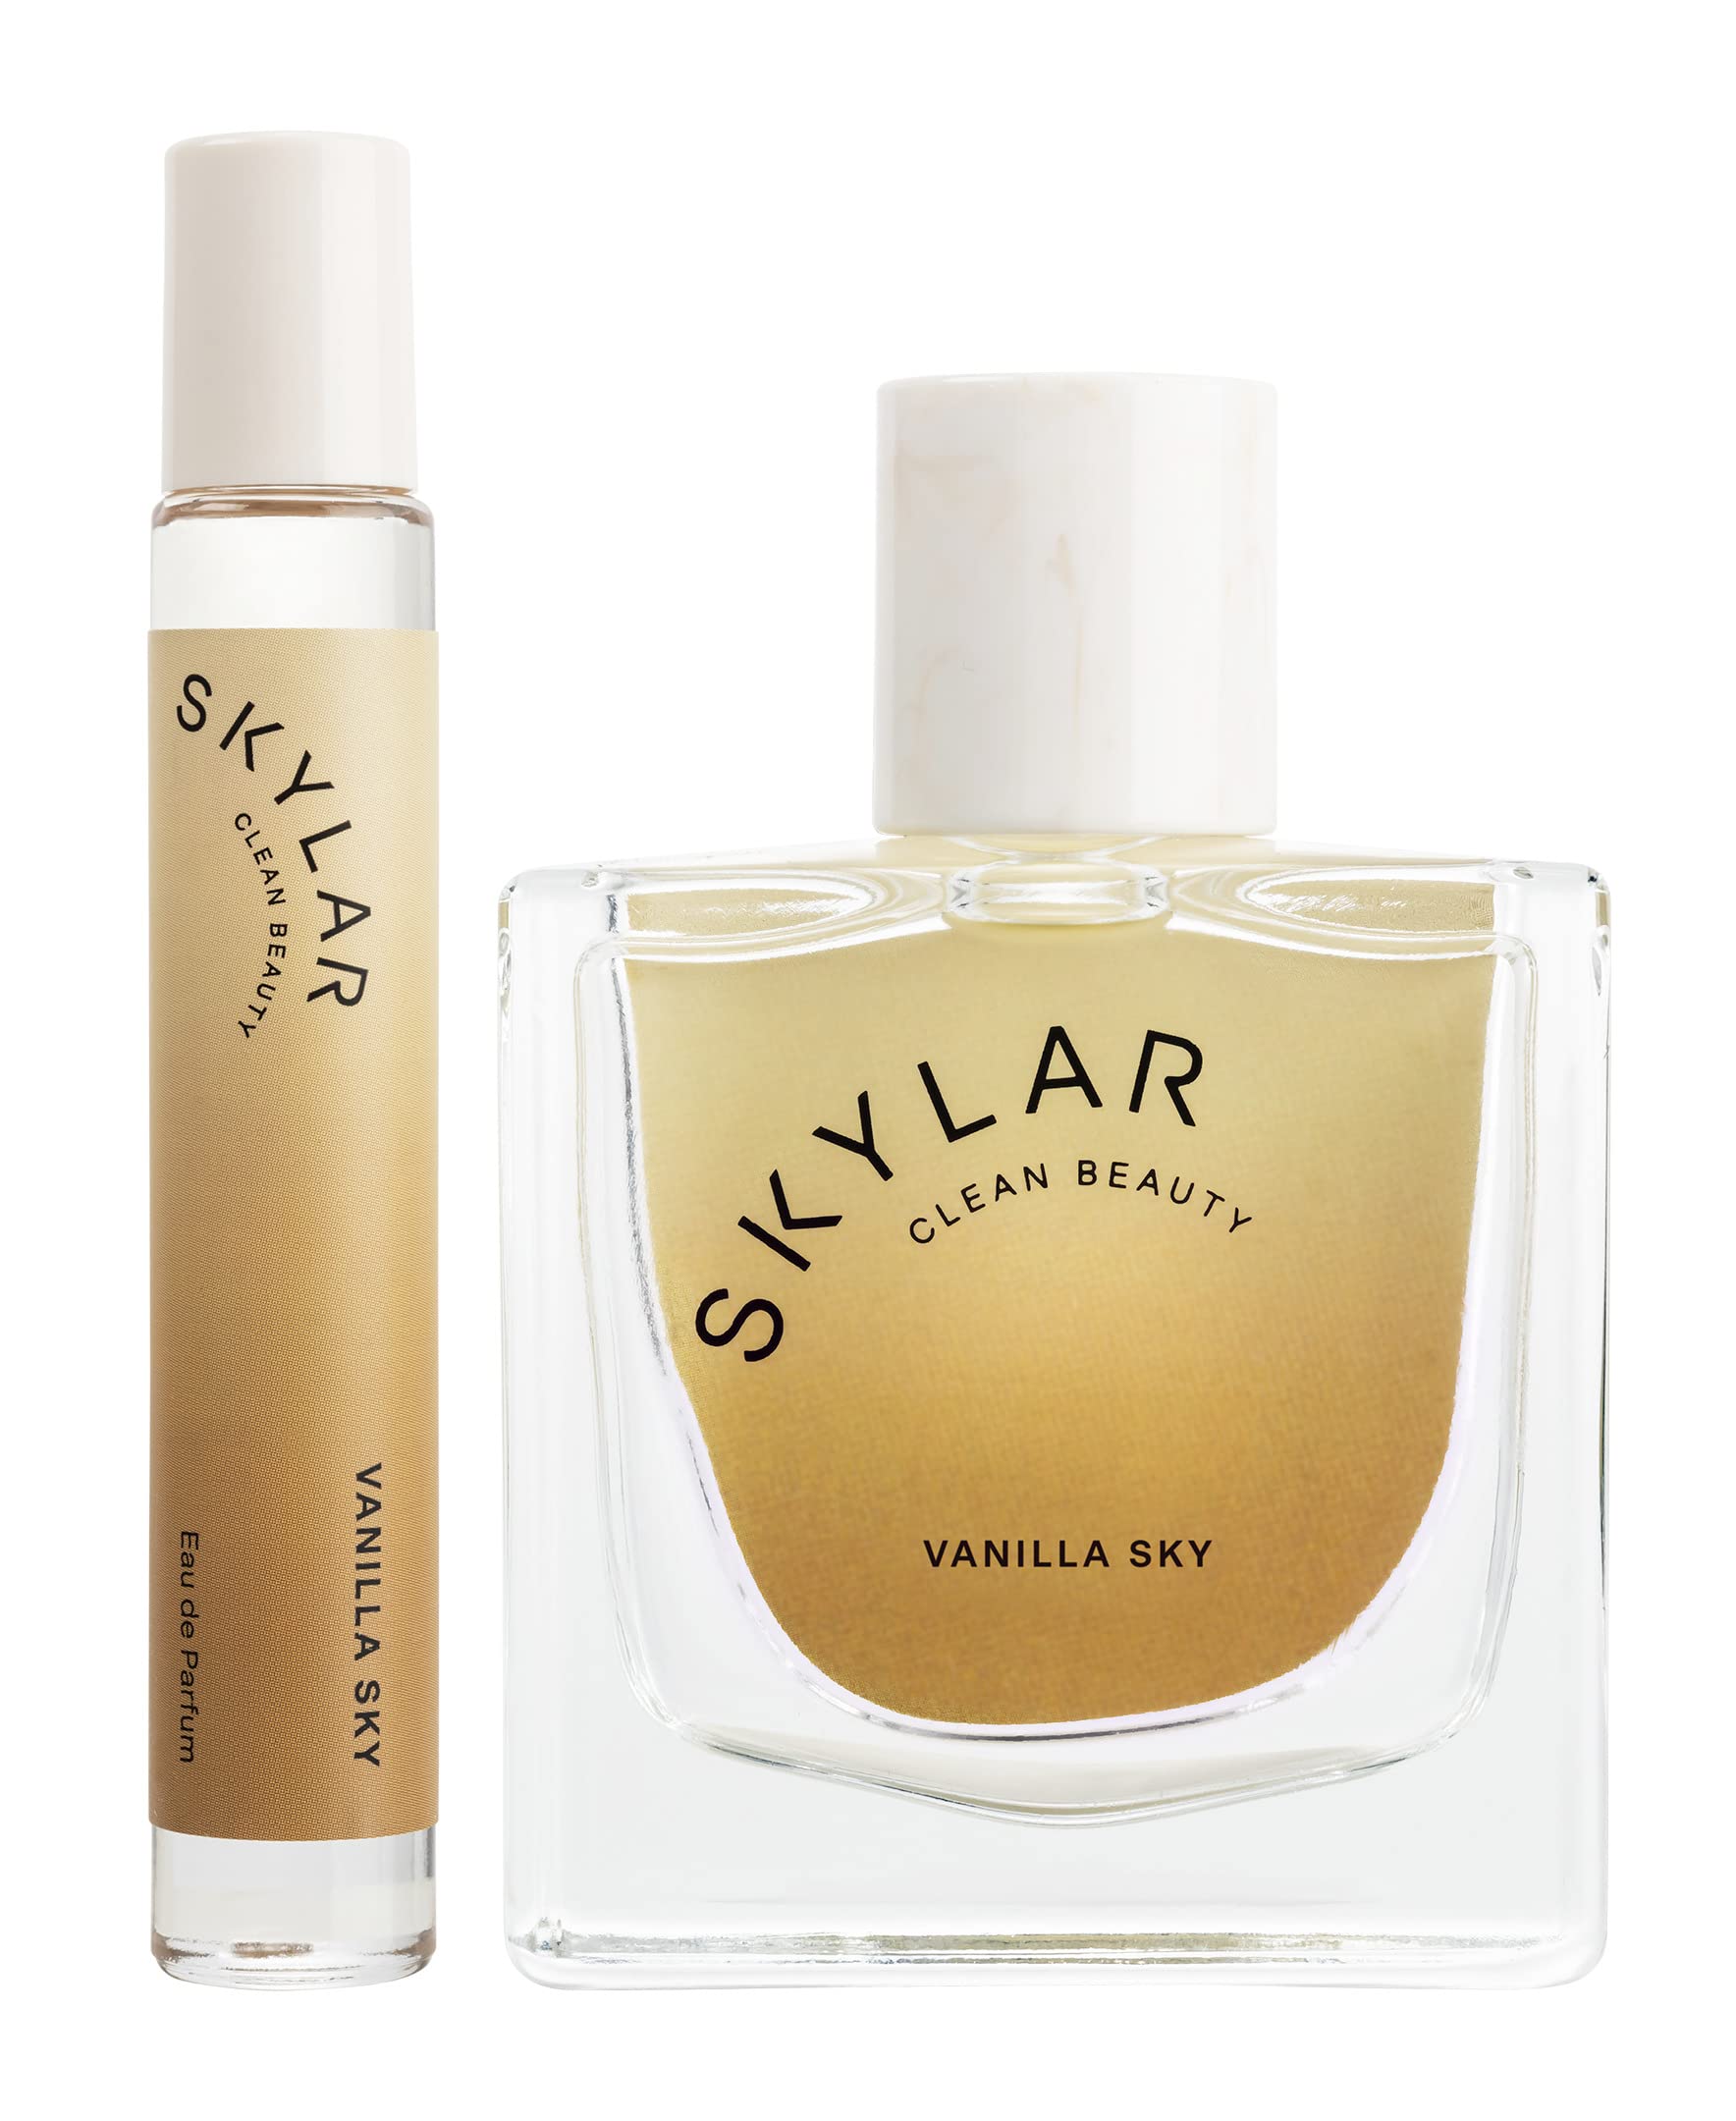 Skylar Vanilla Sky Eau de Perfume Set, 1.7oz + 0.33oz Rollerball - Hypoallergenic & Clean Perfume for Women & Men - Gourmand Perfume with Notes of Cappuccino, Vanilla & Caramelized Cedar